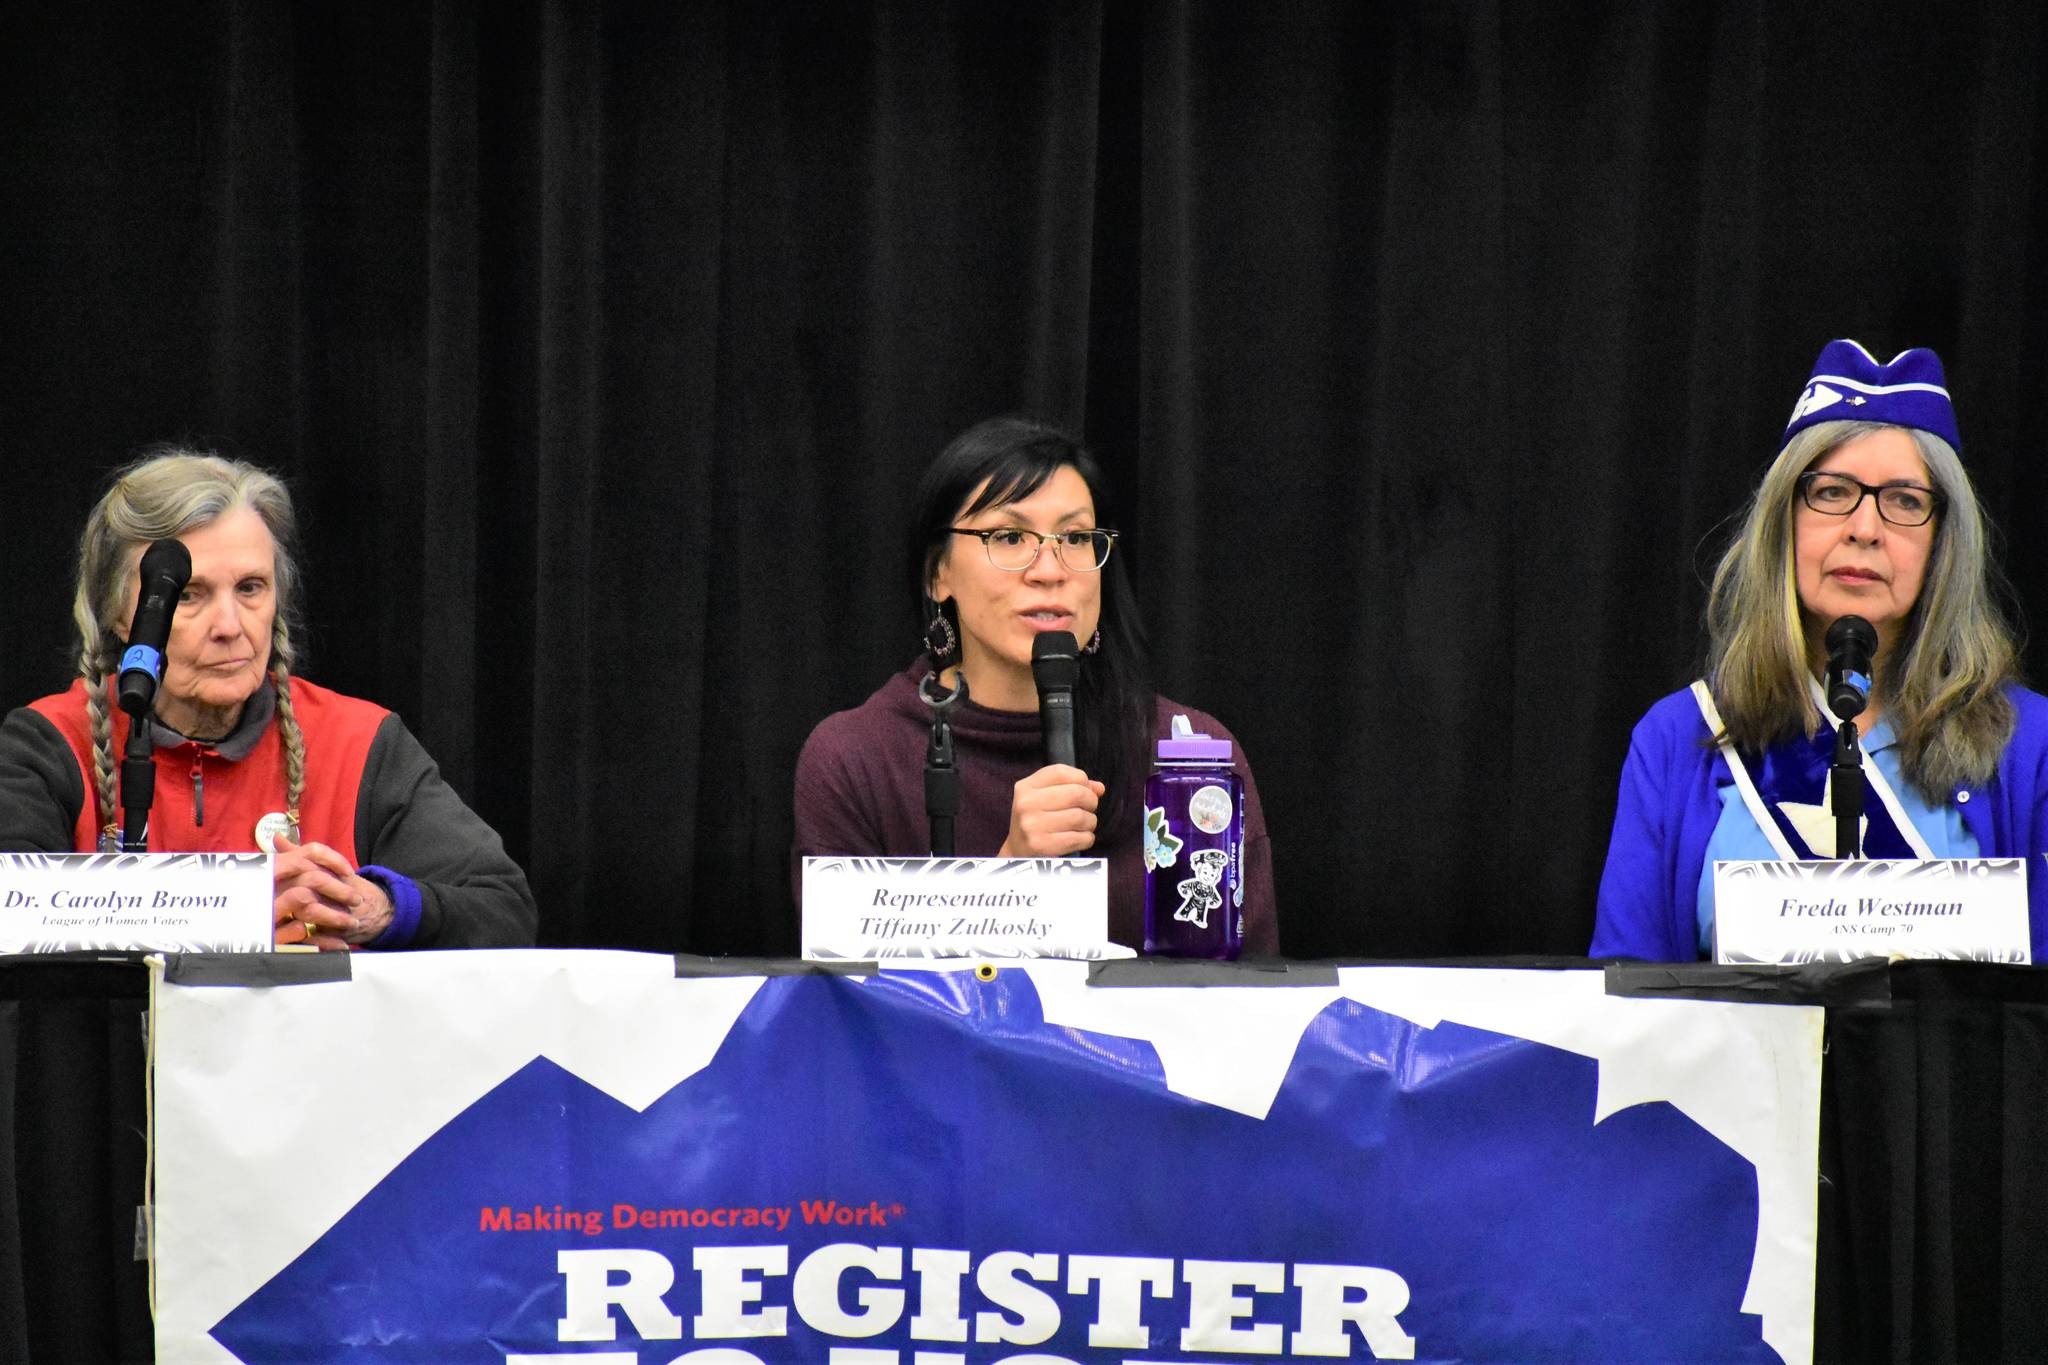 Alaska Native leaders say racial discrimination still affects communities